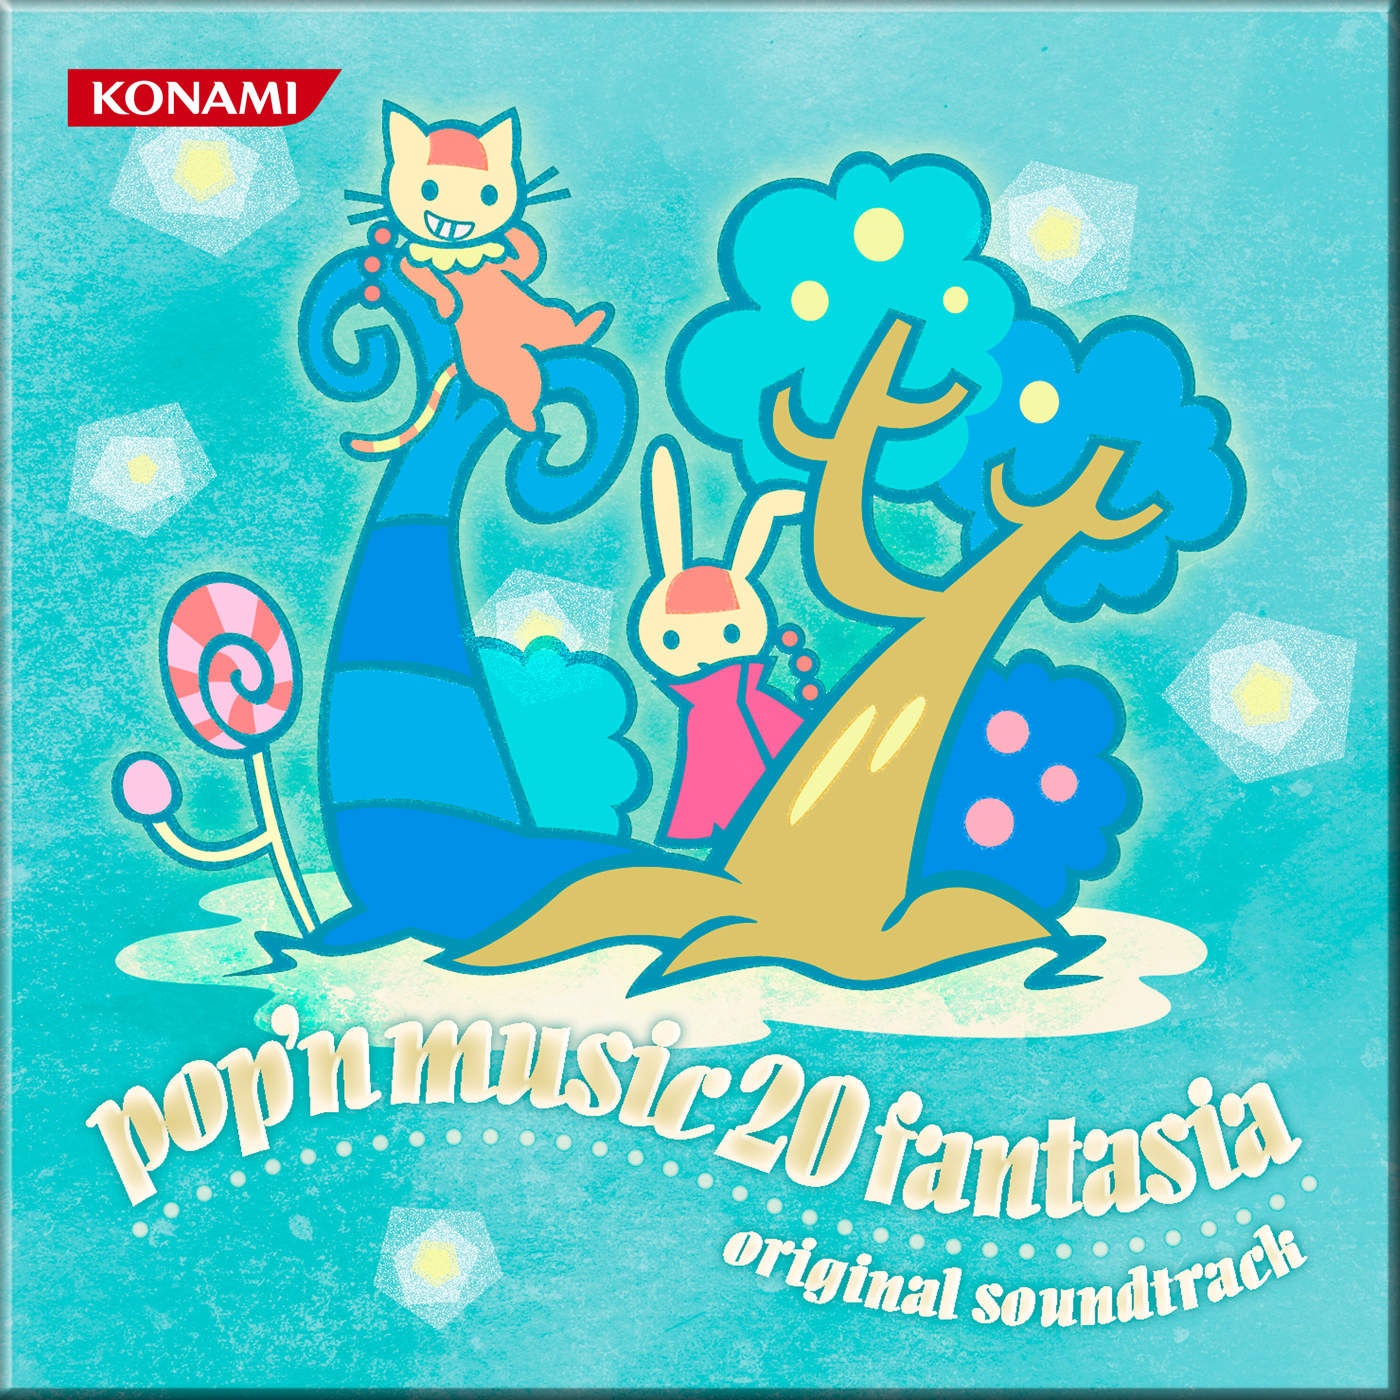 pop'n music 20 fantasia original soundtrack